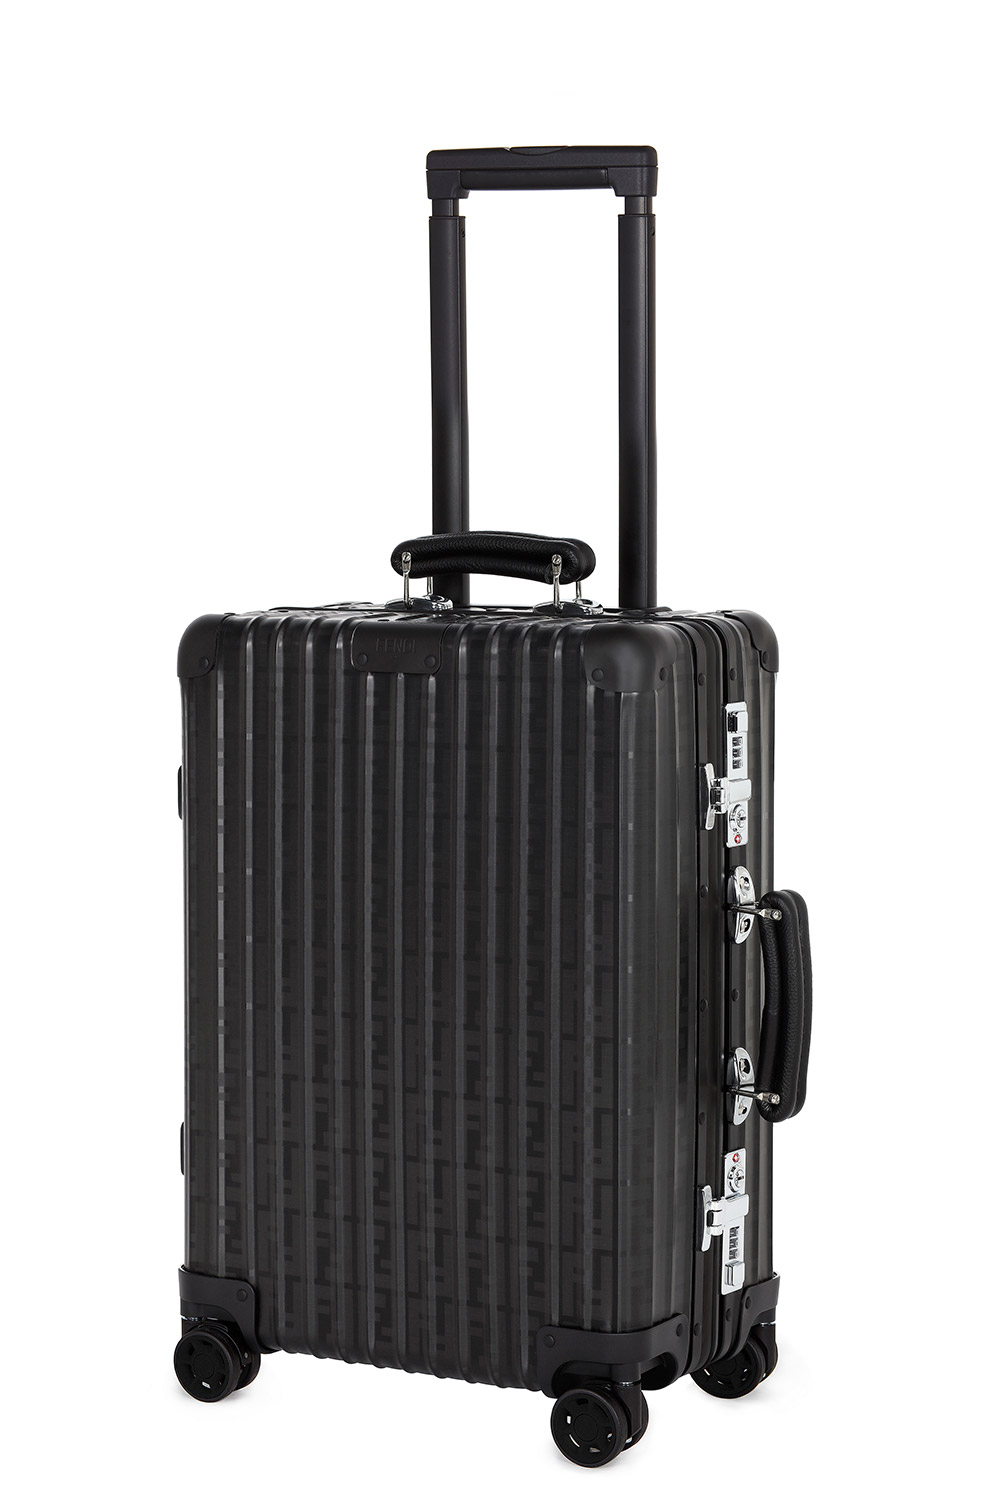 fendi and rimowa suitcase black stand - FENDIxRIMOWA 打造独一无二的终极性铝质行李箱！